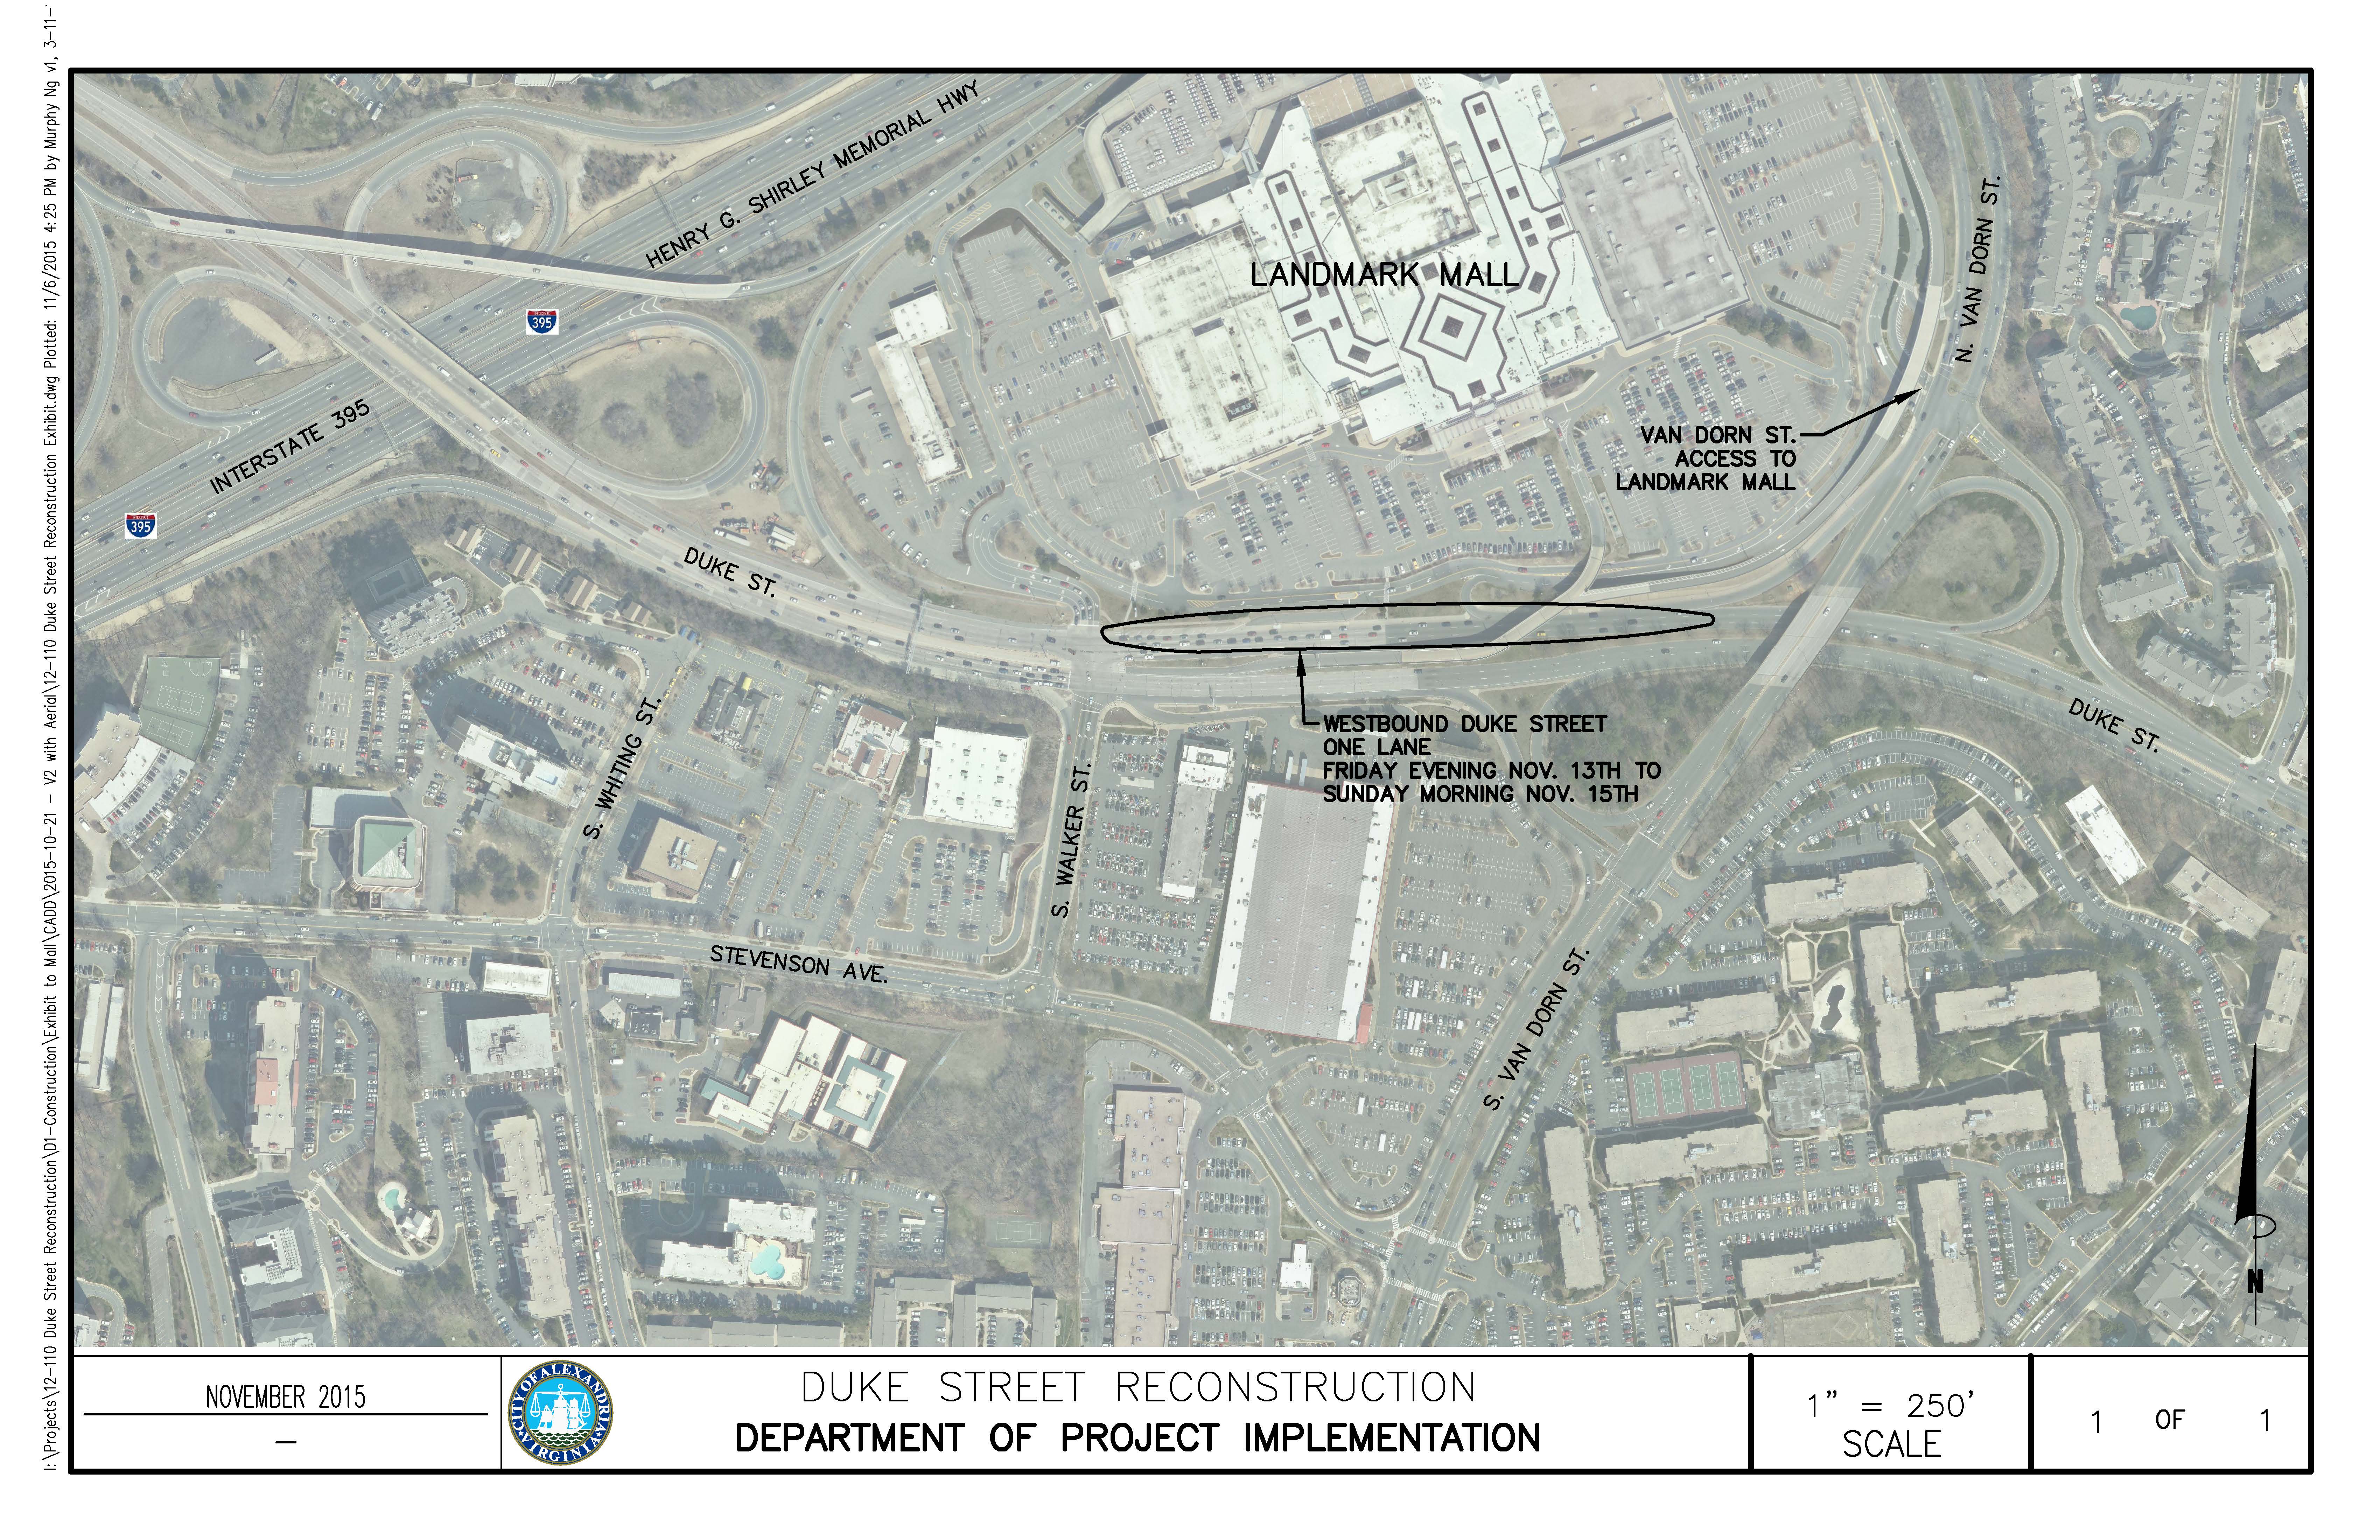 Duke Street Closure Map - Click to Enlarge